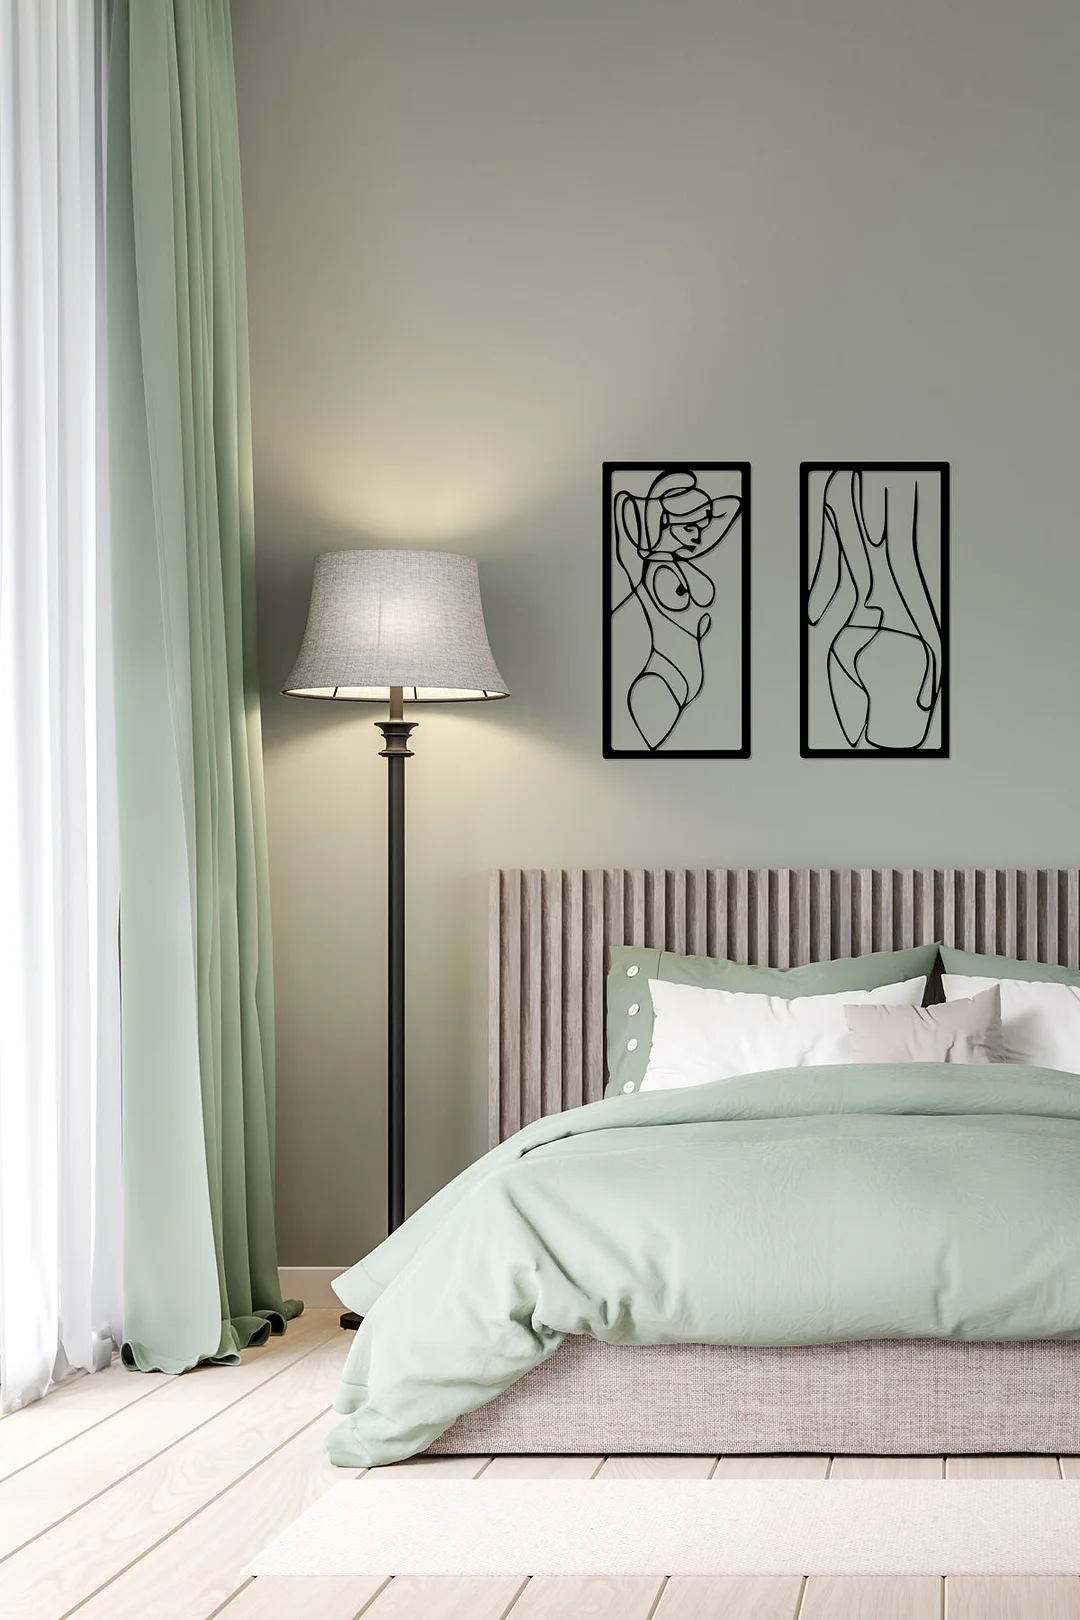 Set of 2 Nude Female Body Metal Wall Art, Woman Metal Wall Art, Bathroom Wall Decor, Metal Line Art, Bedroom Wall Decor